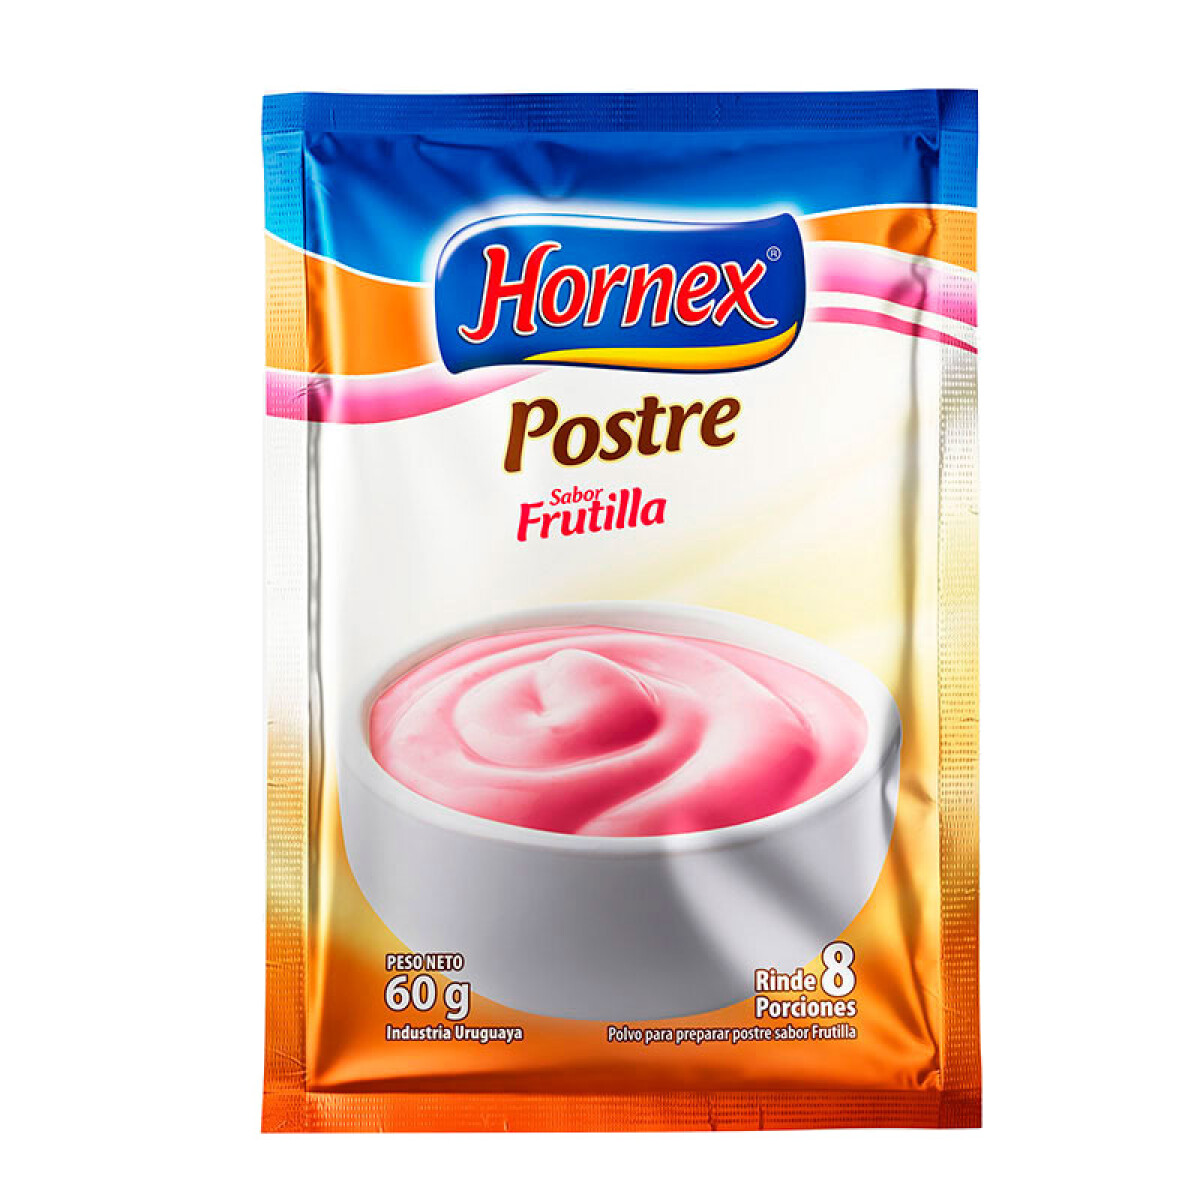 Postre HORNEX 60grs rinde 8 porciones - Frutilla 